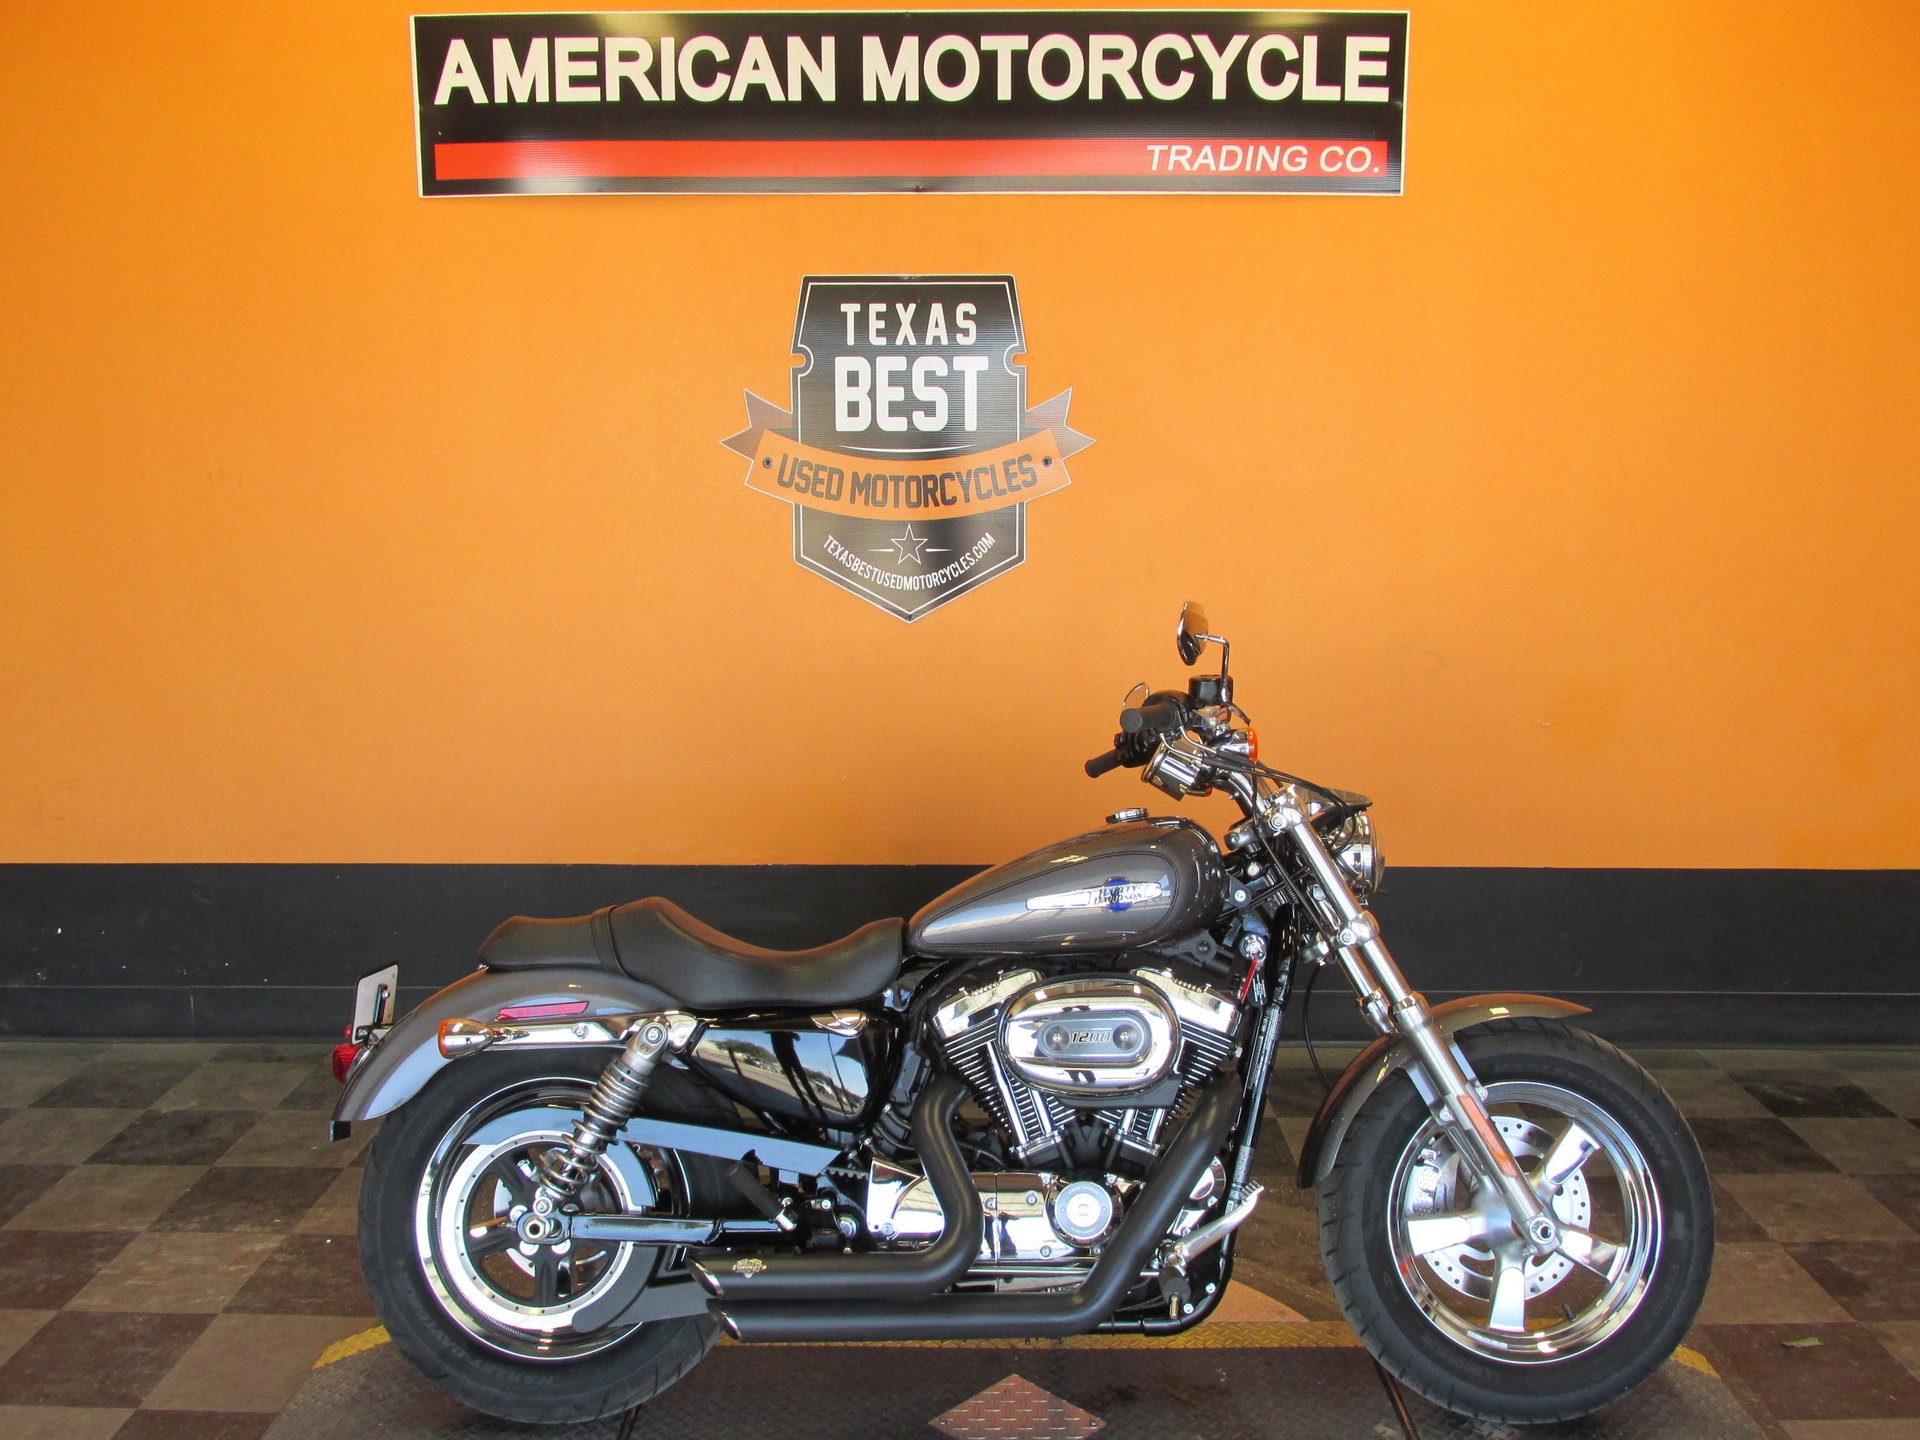 2016 Harley Davidson Sportster 1200 American Motorcycle Trading Company Used Harley Davidson Motorcycles